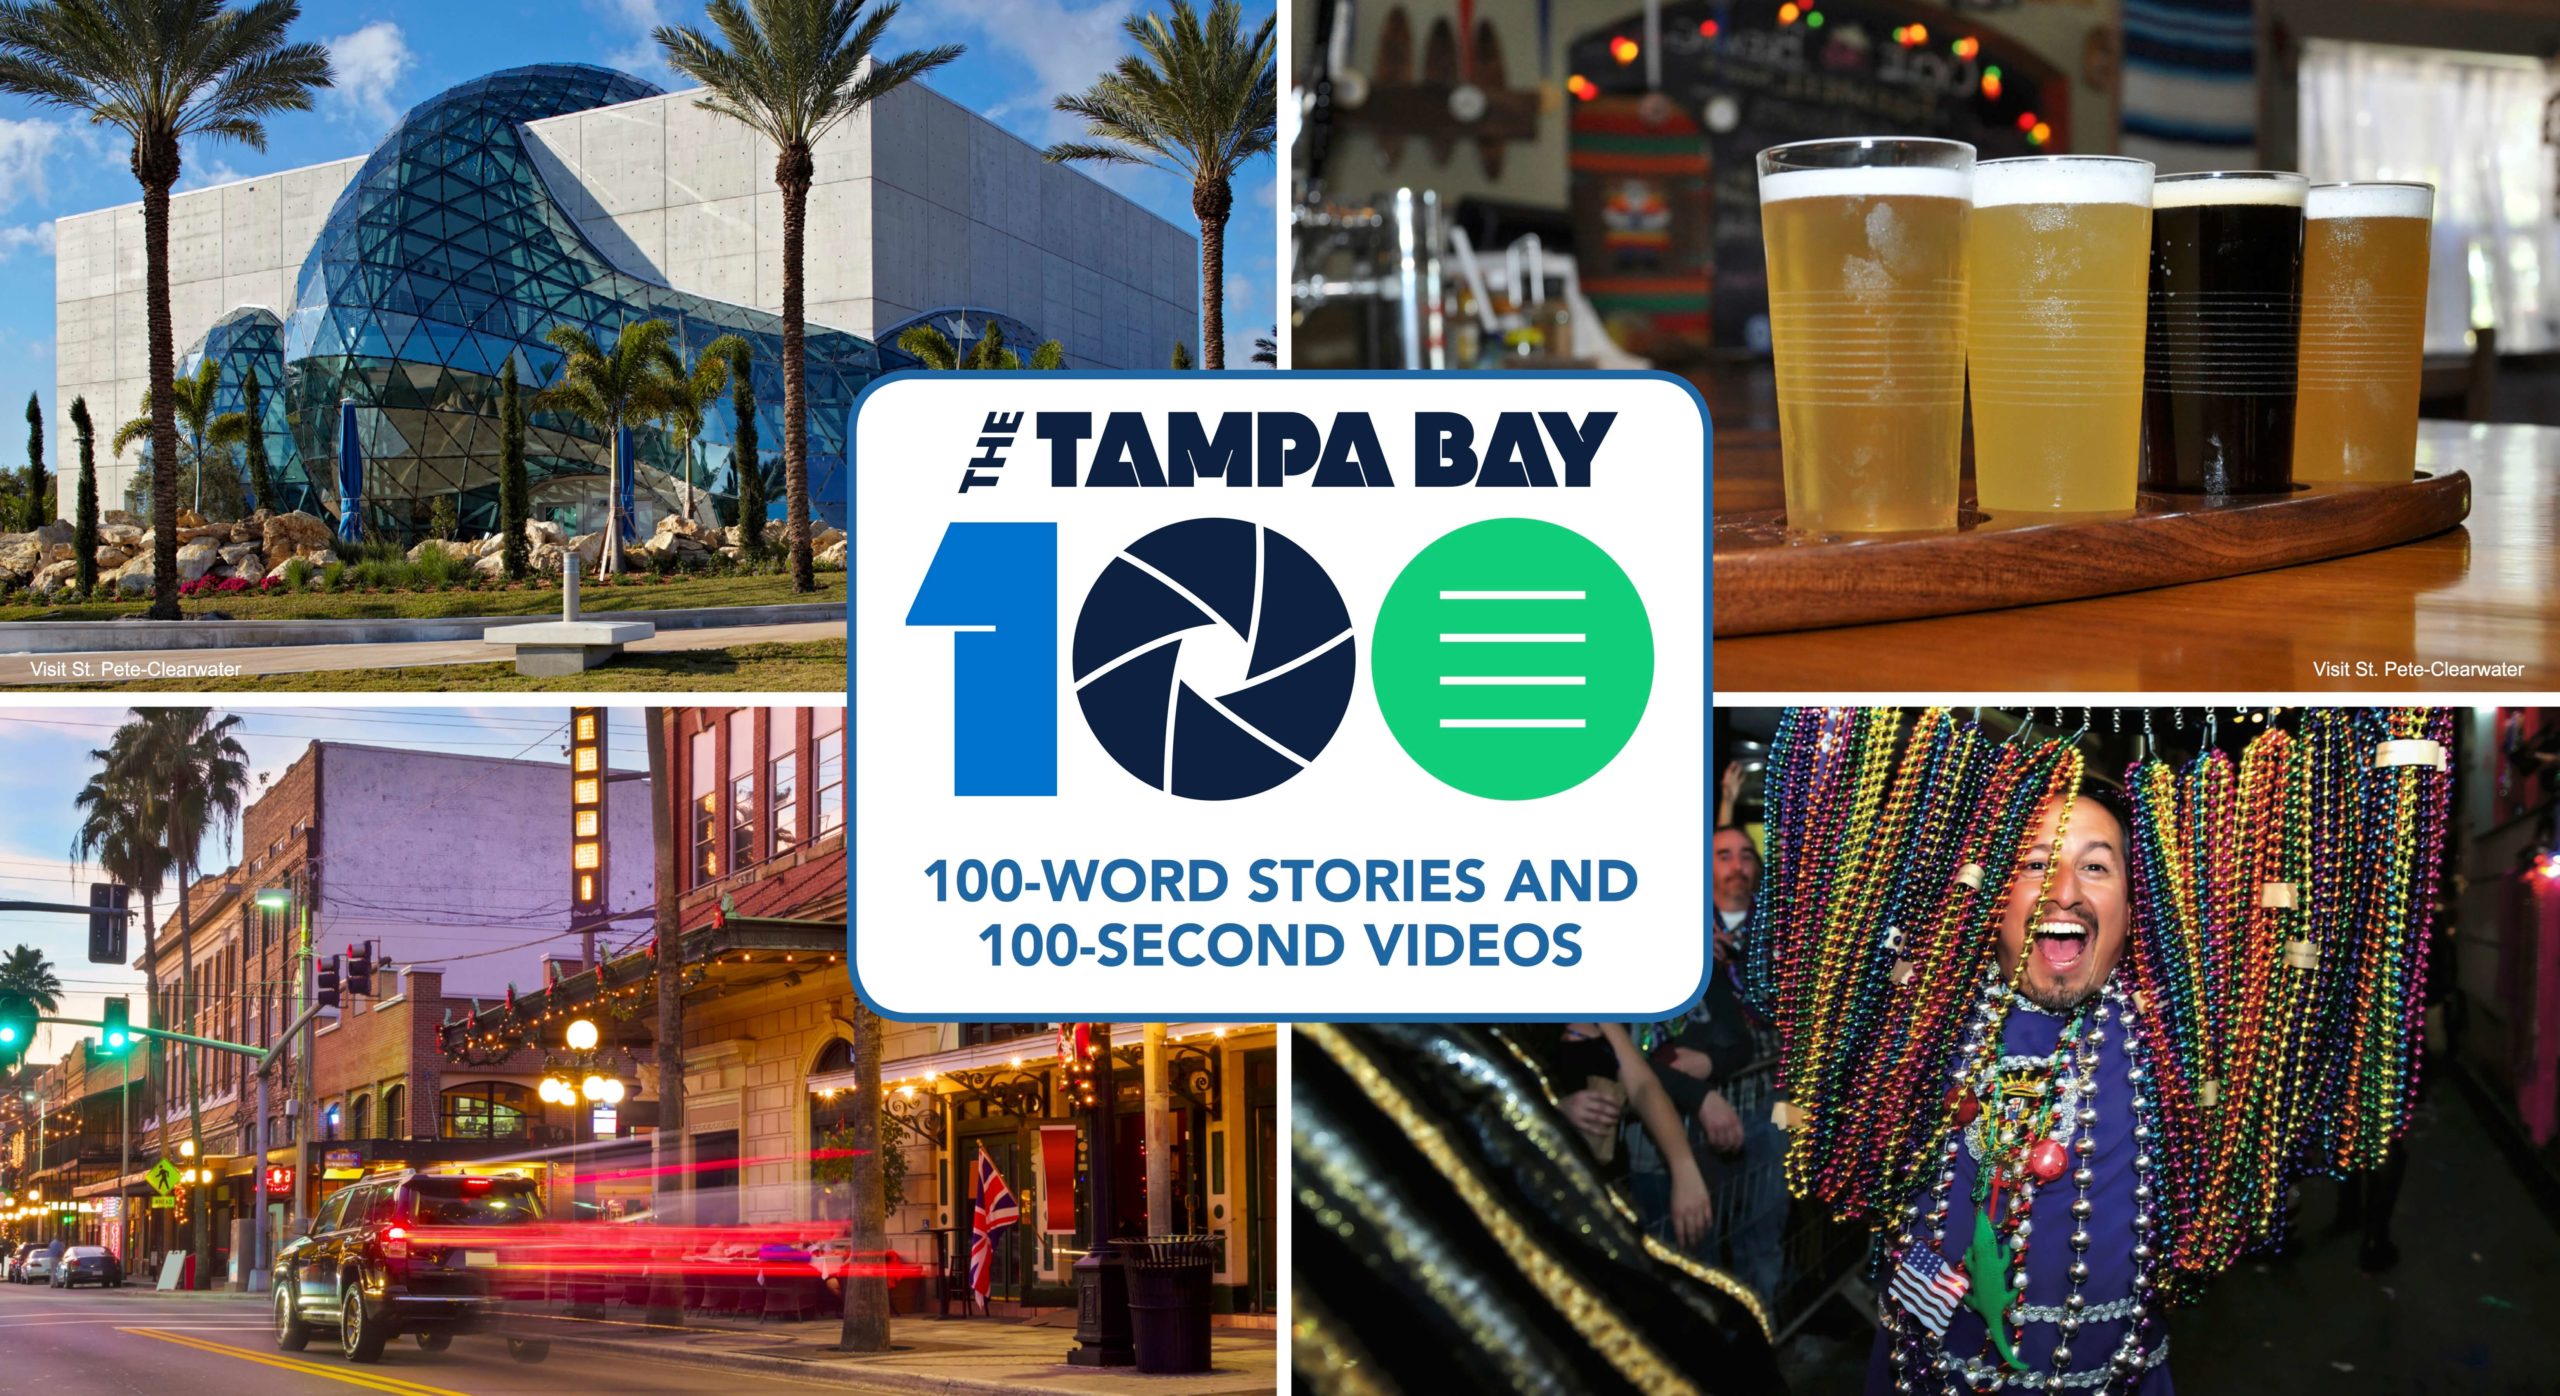 B2 launches The Tampa Bay 100 publishing platform